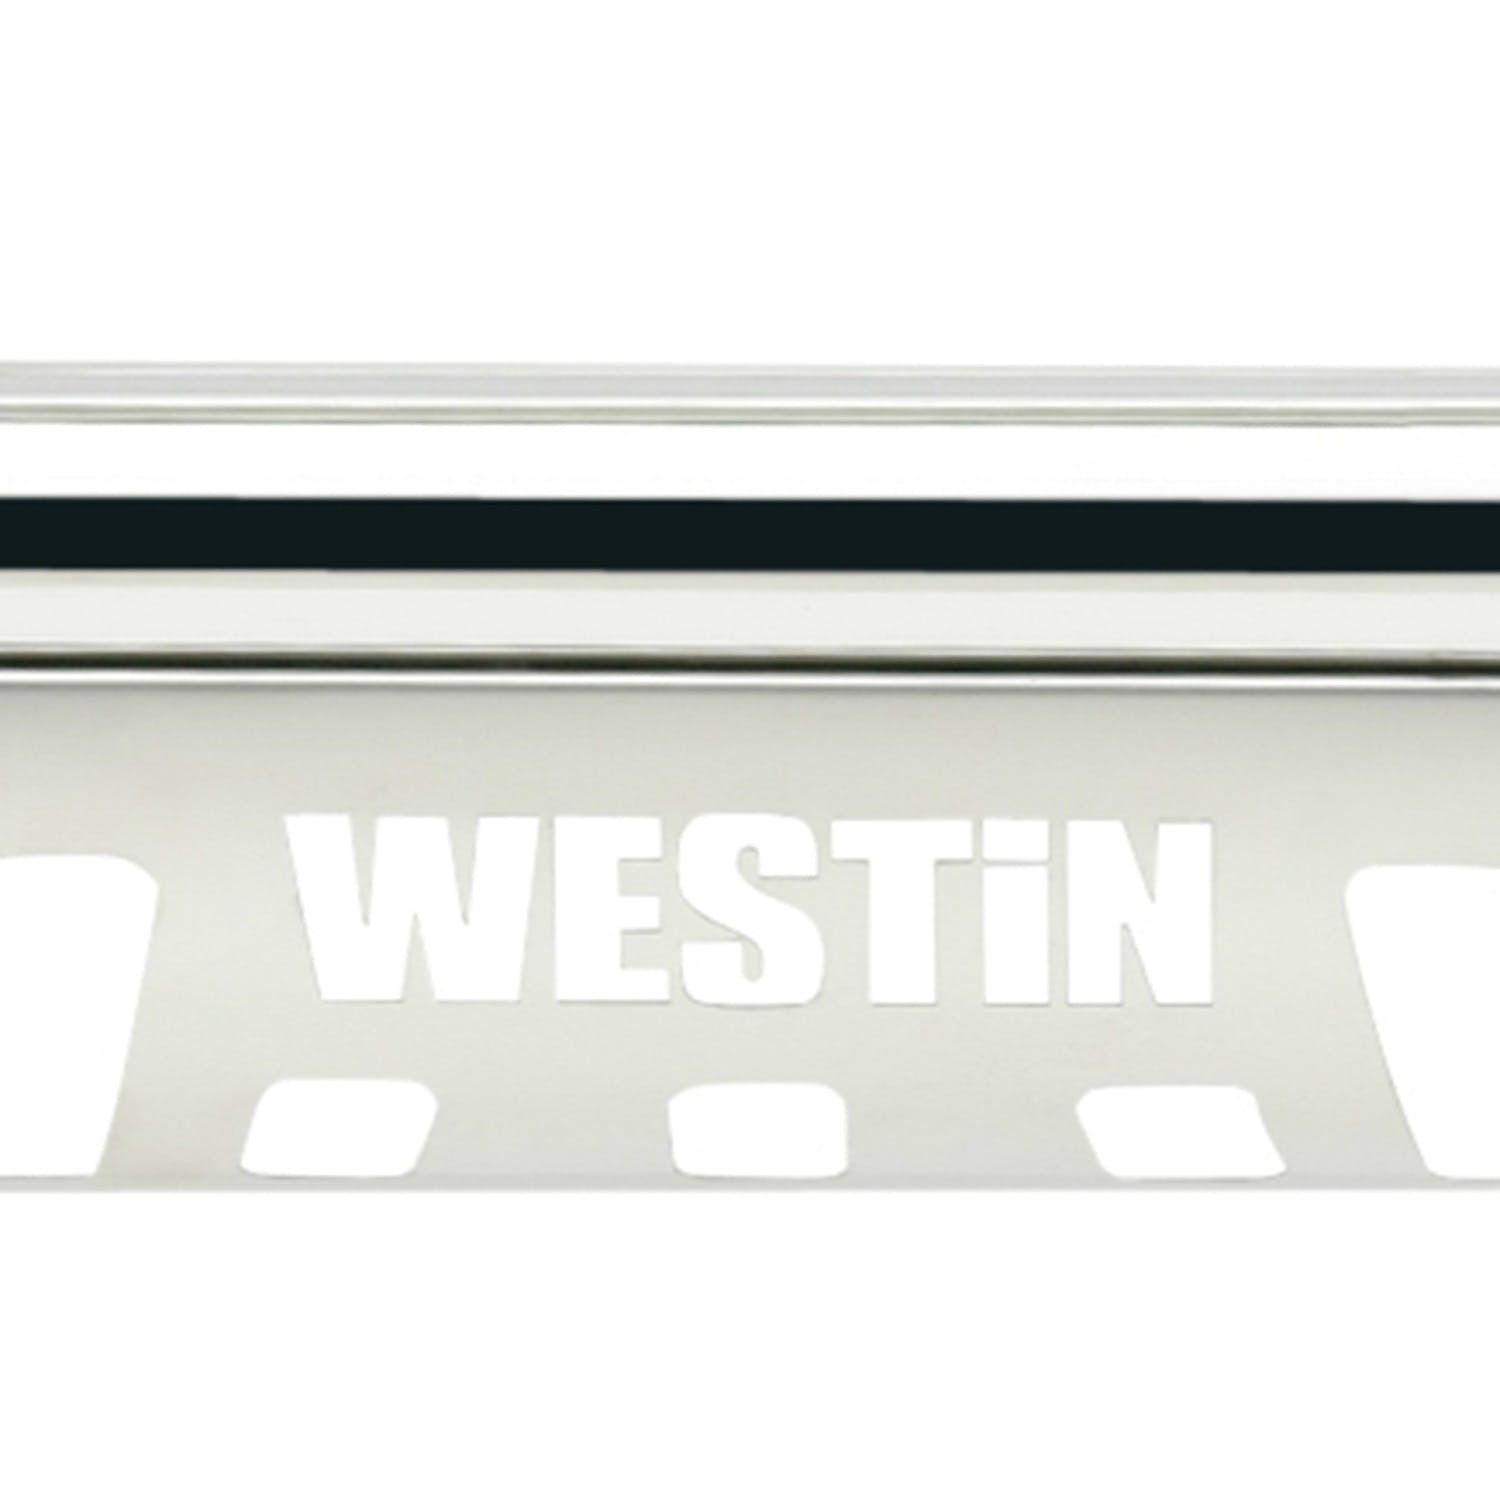 Westin Automotive 31-6000 E-Series Bull Bar Stainless Steel